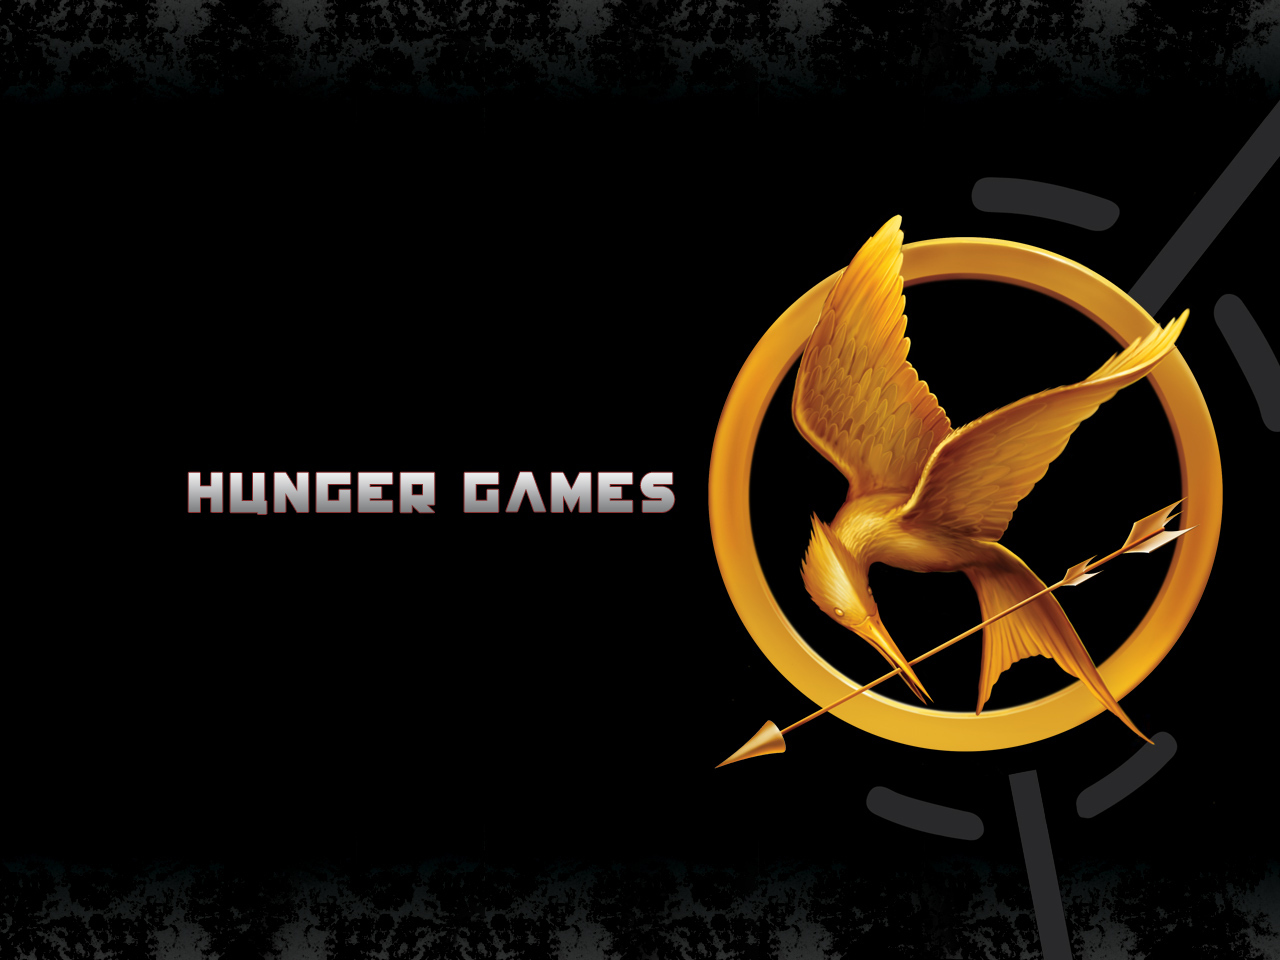 http://4.bp.blogspot.com/-V8ONaJe5-B4/T1NiFgQWLuI/AAAAAAAACAE/Q_Mcnb1MwHk/s1600/The-Hunger-Games-the-hunger-game-trilogy-2624991-1280-960.jpg